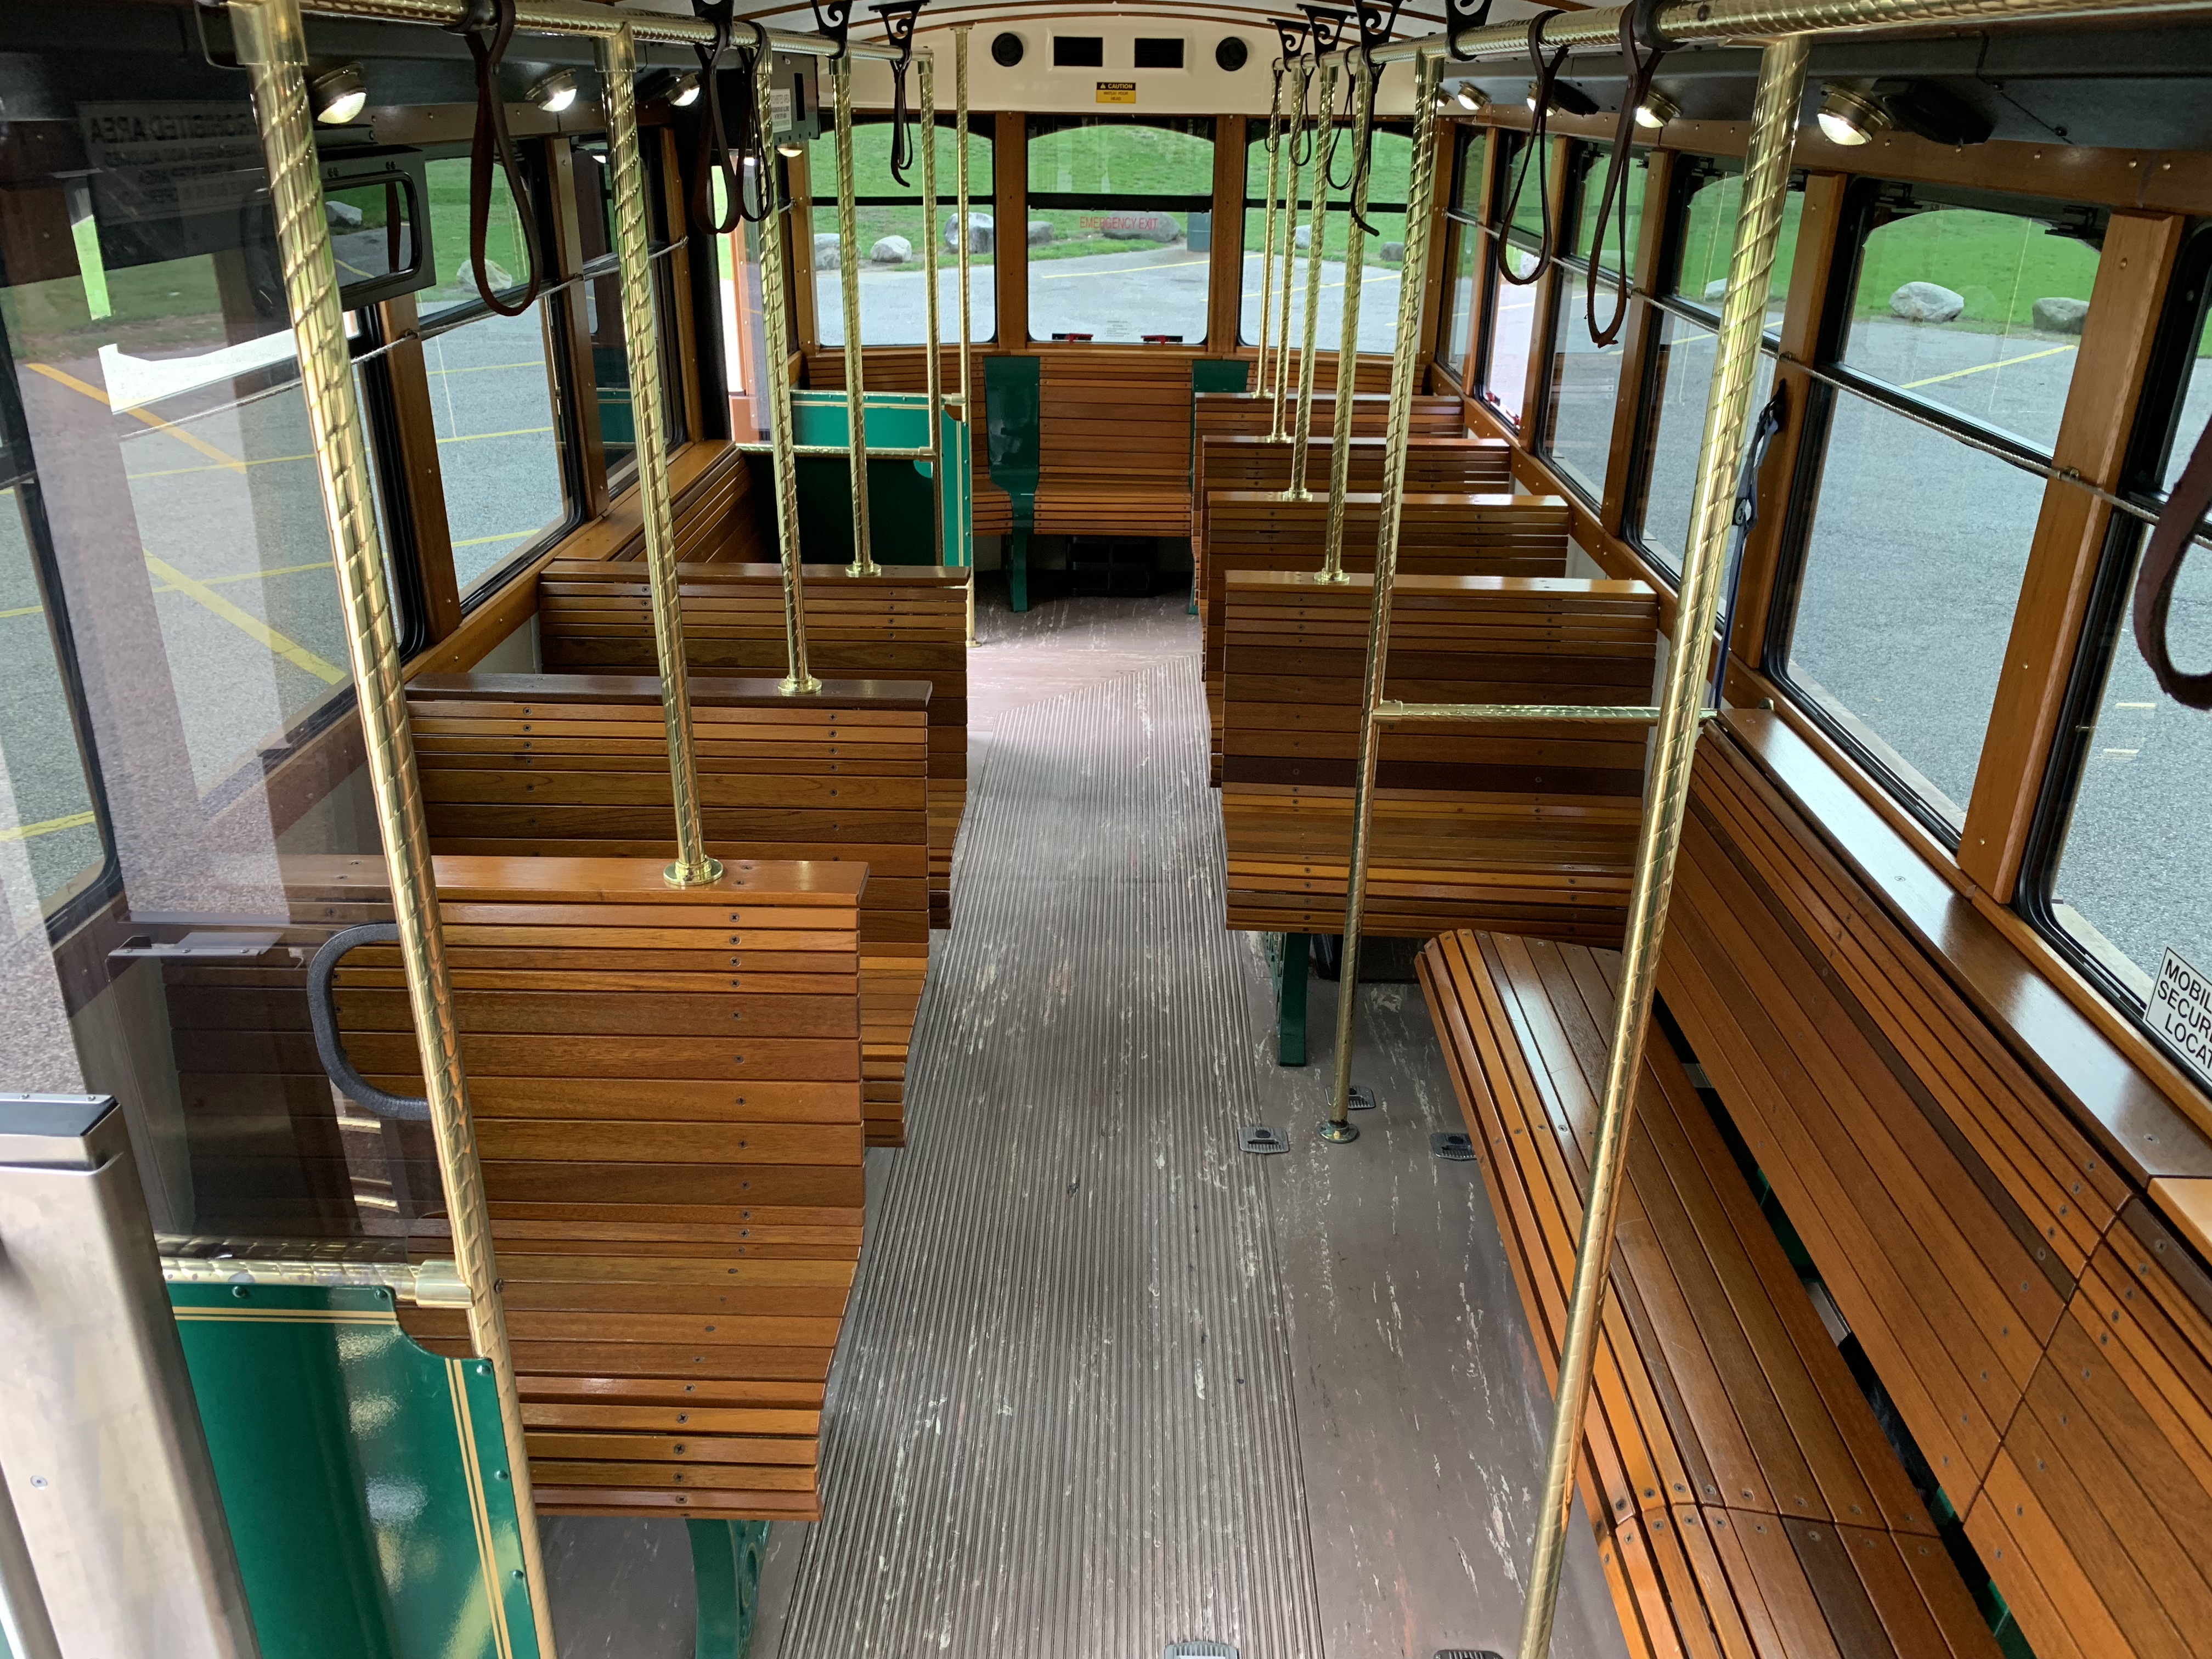 27 Passenger Trolley Interior 1